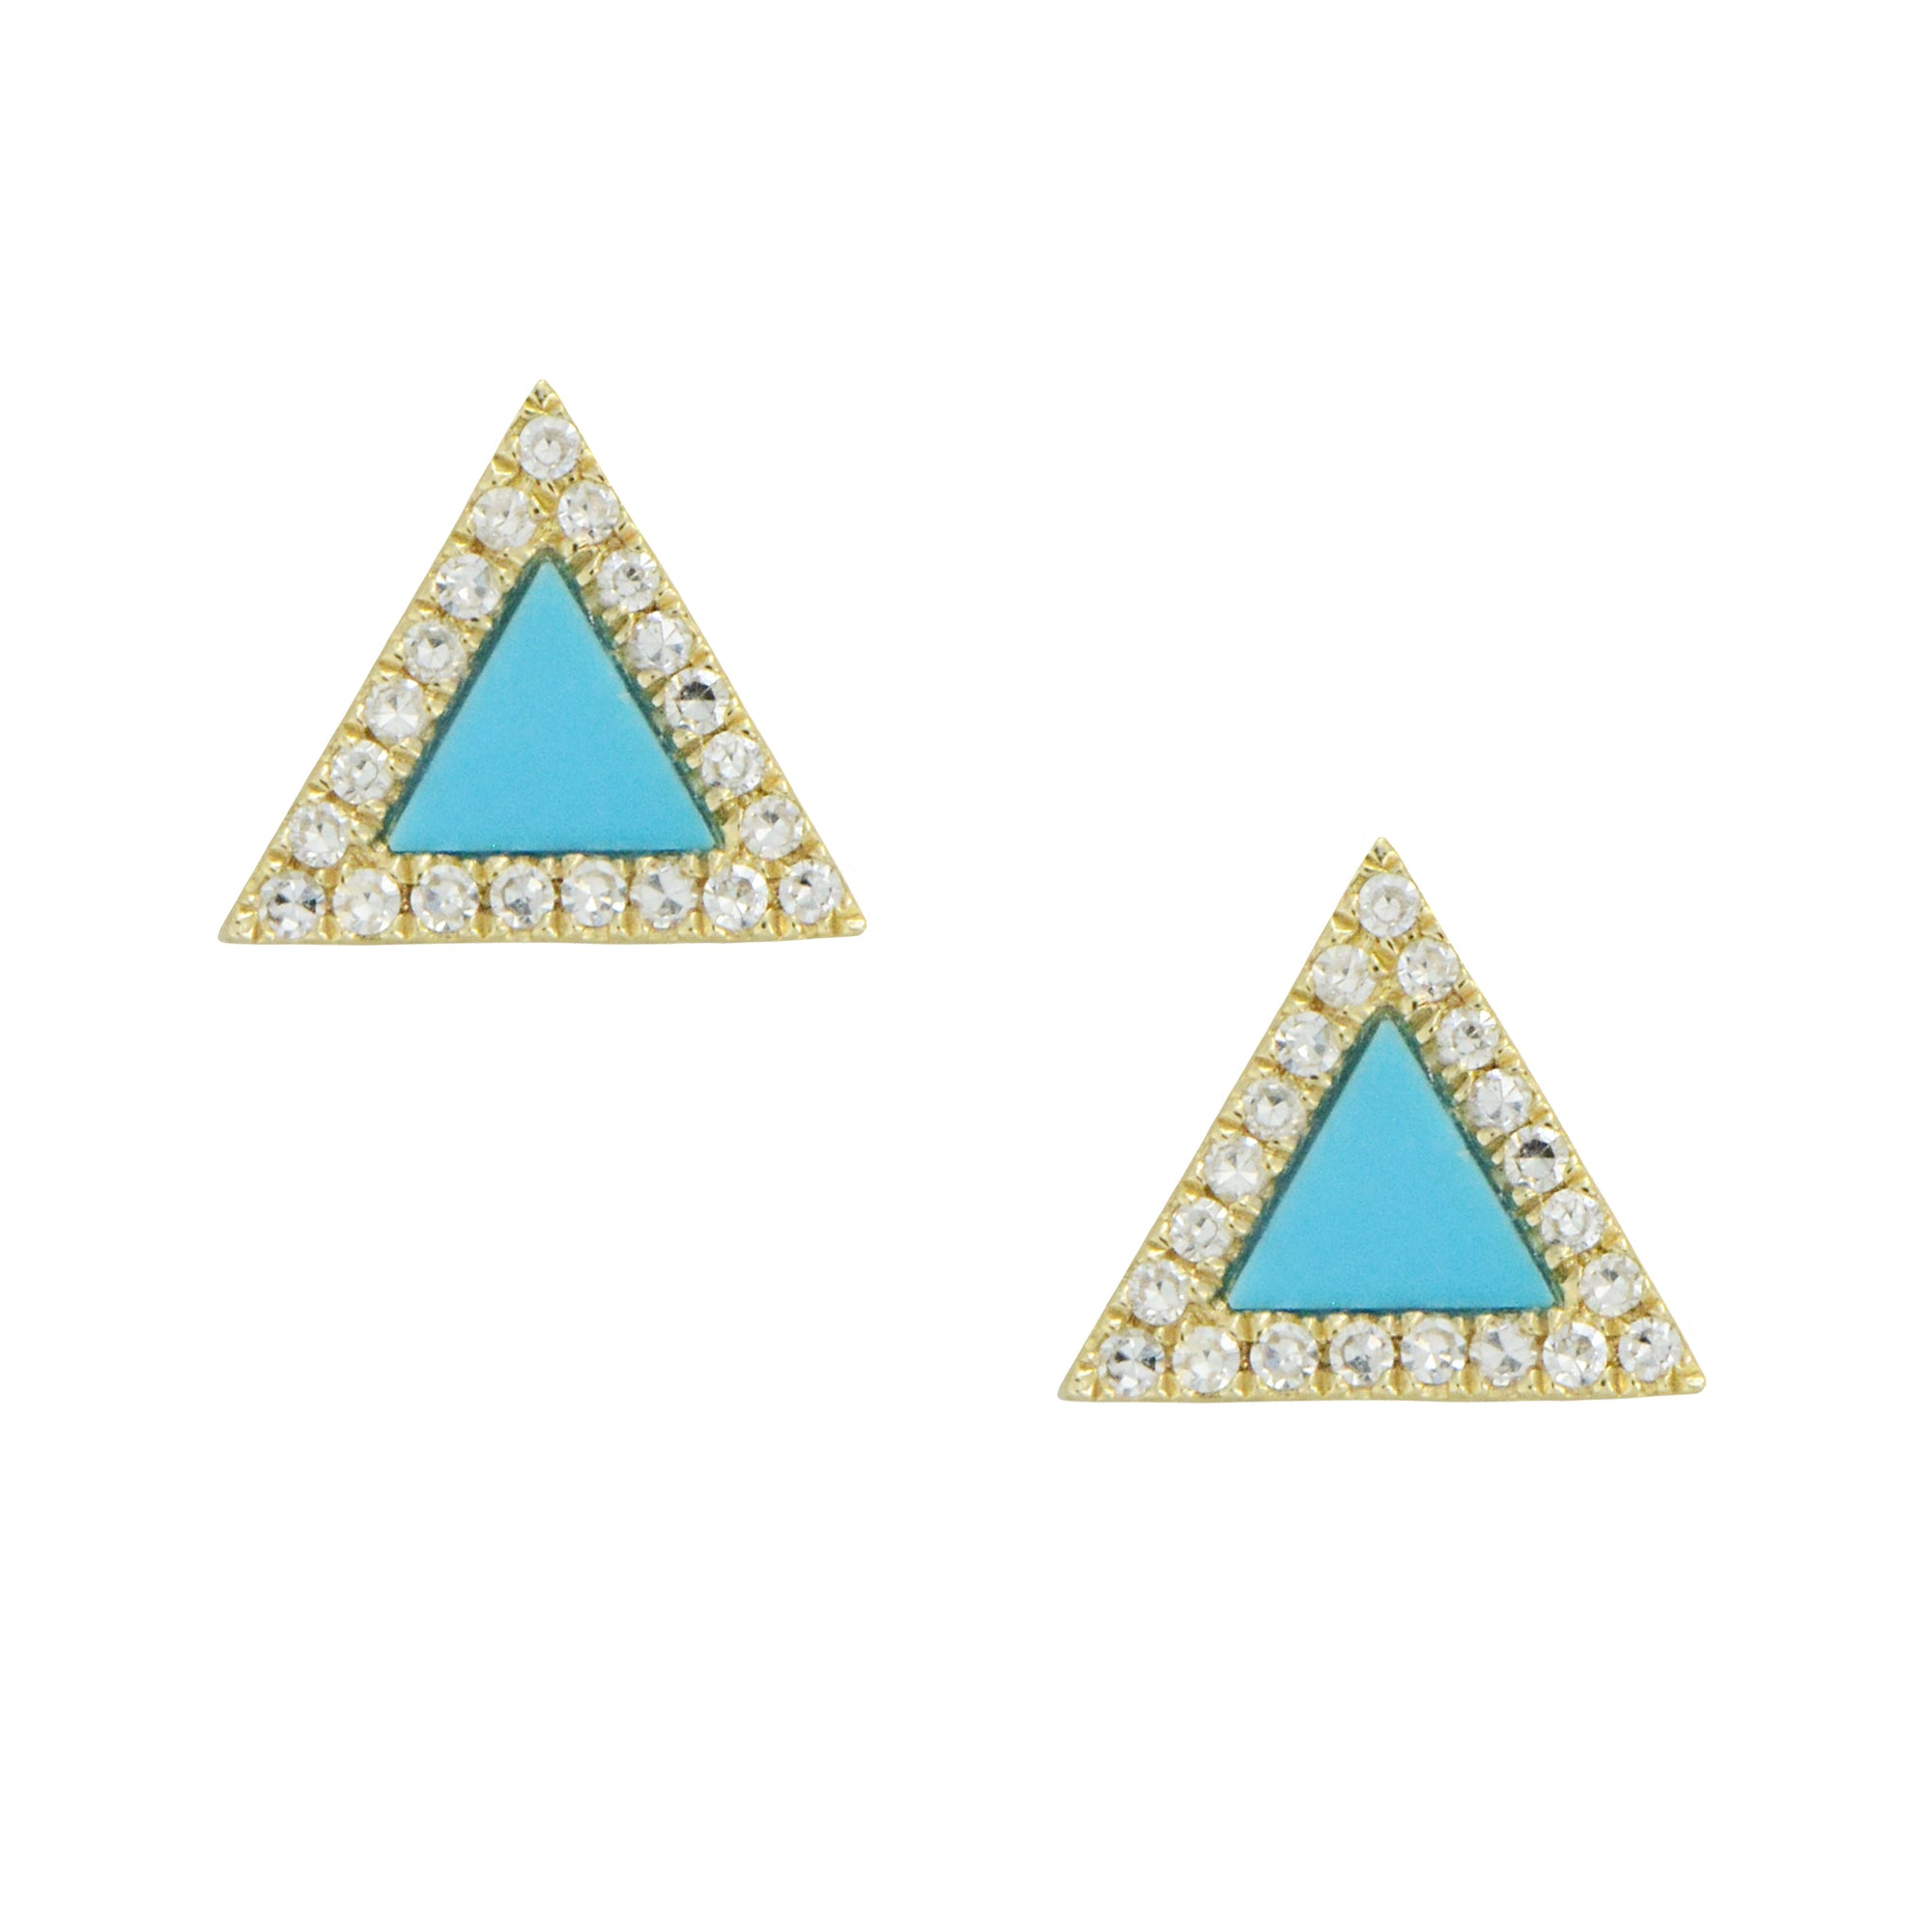 Triangle Turquoise Diamond Stud Earrings in 14k Gold